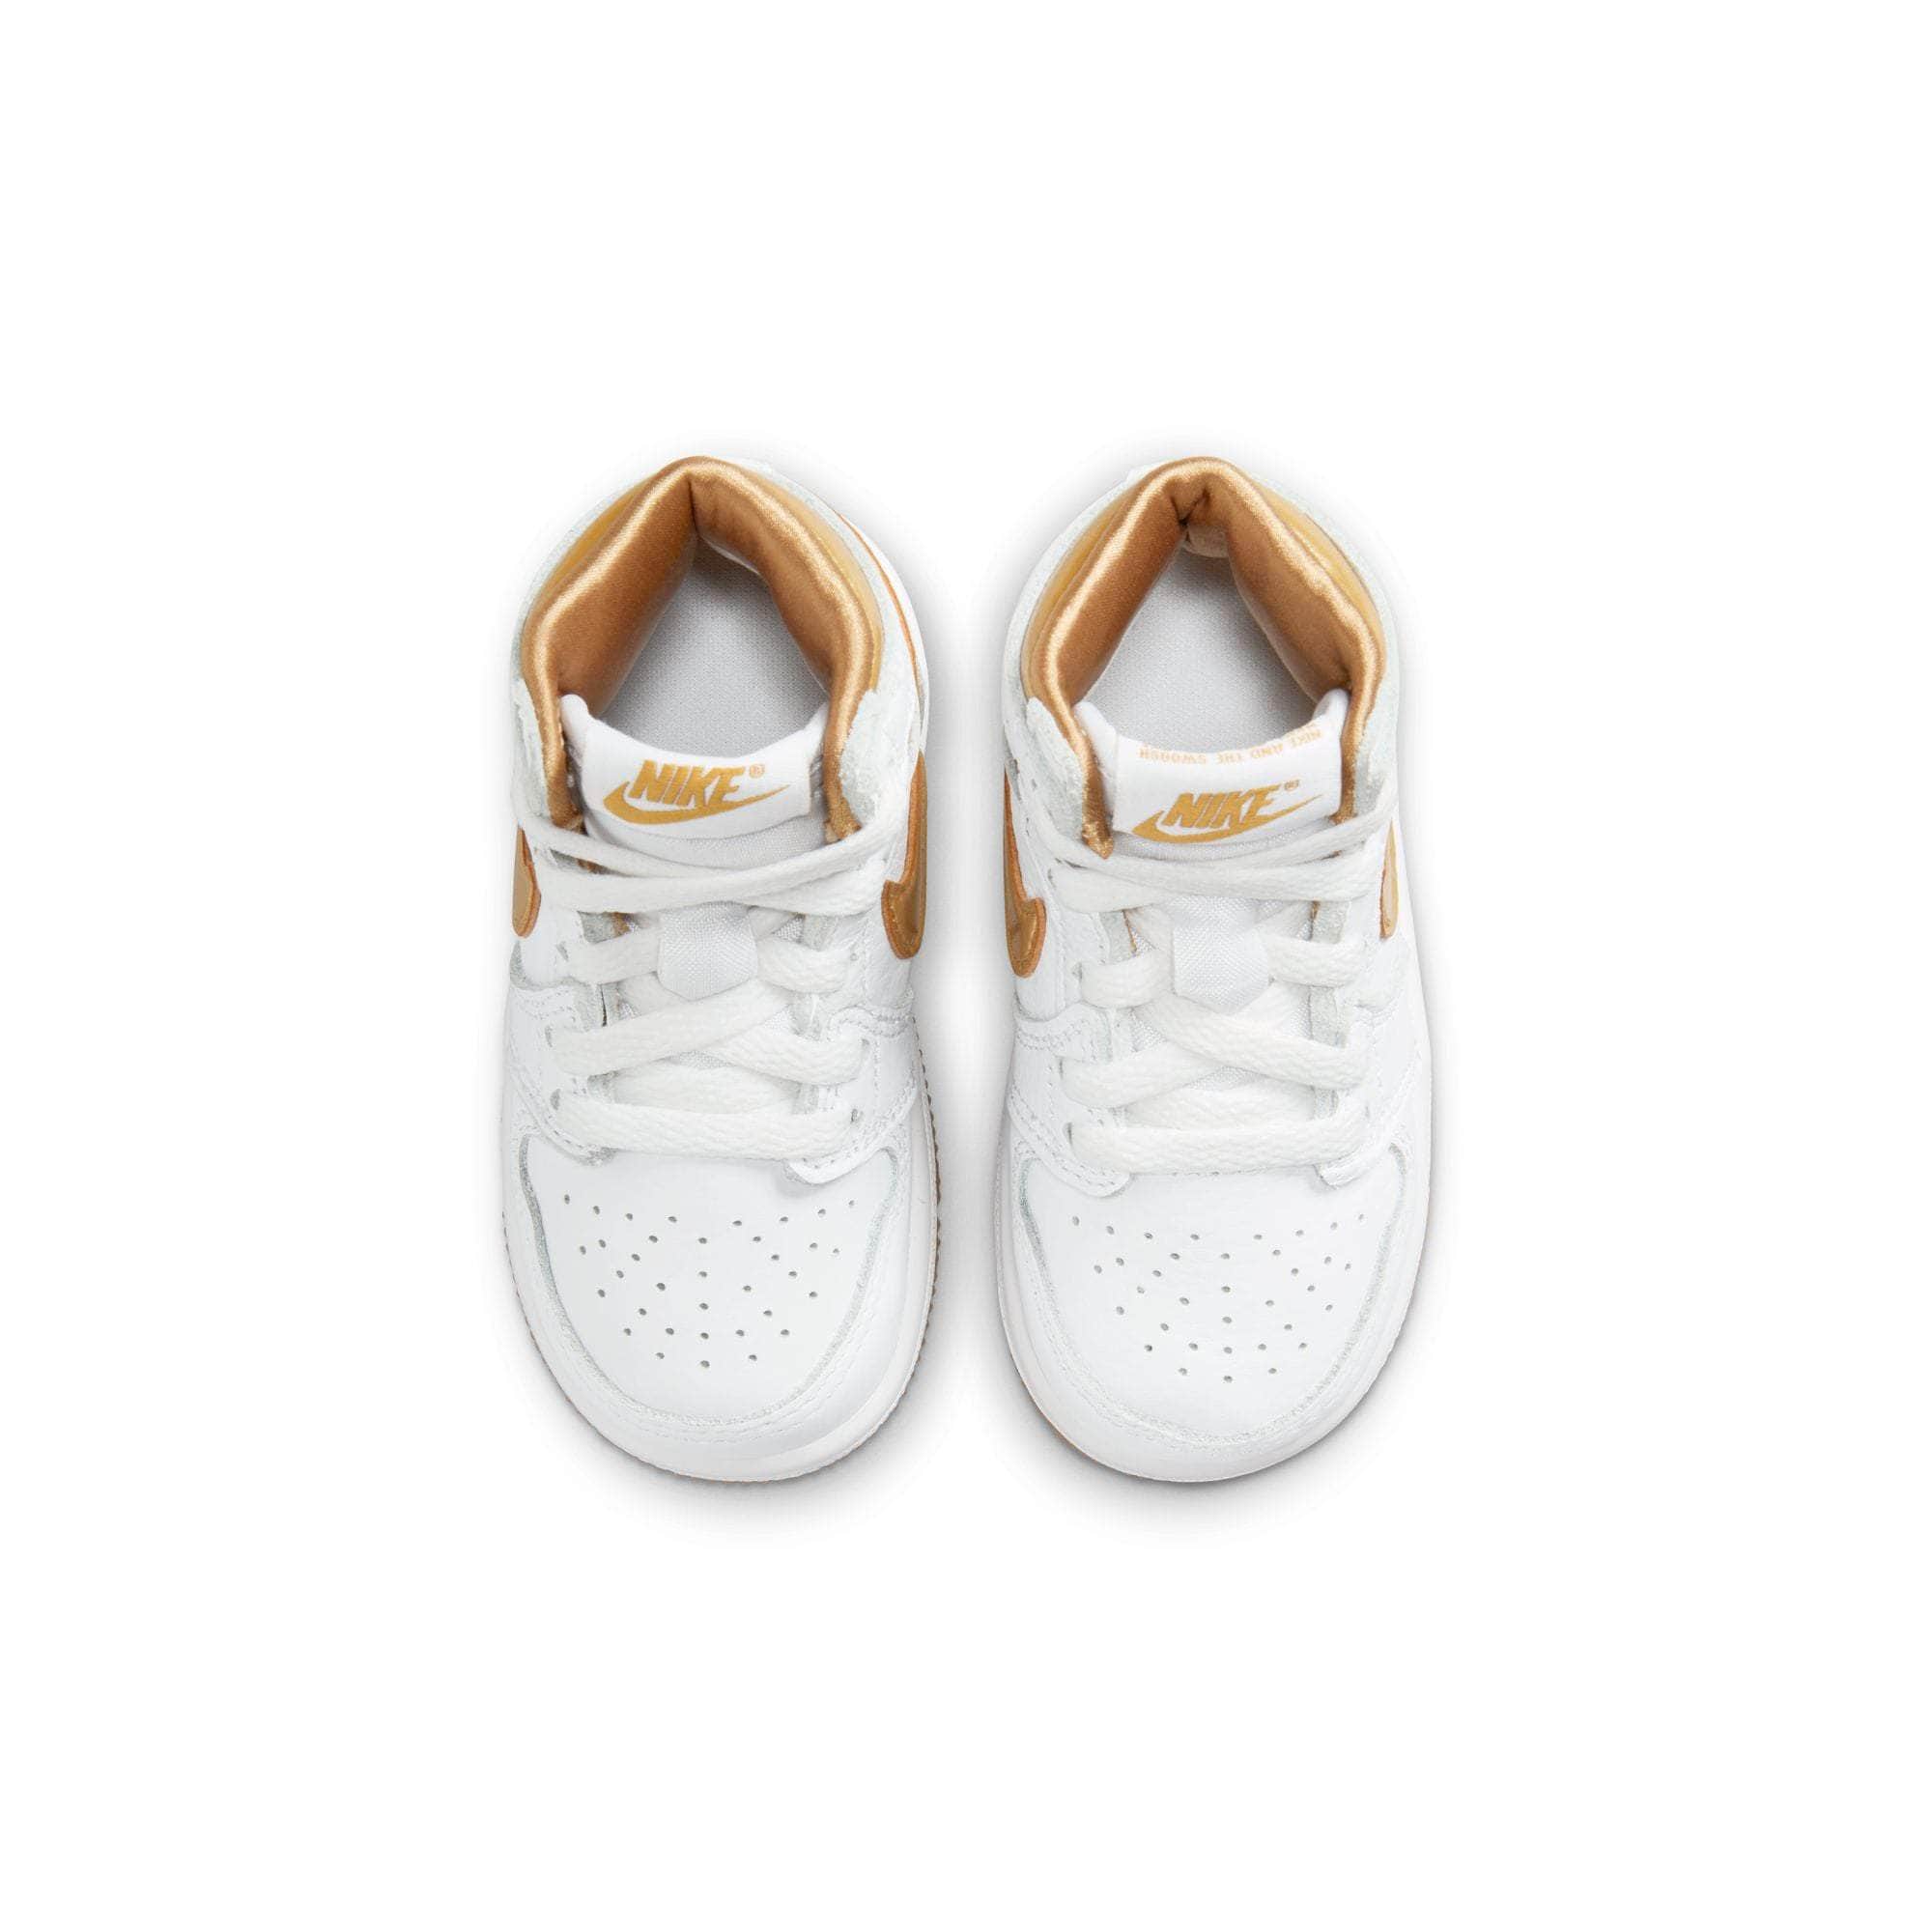 Air Jordan Footwear Air Jordan 1 High OG “Metallic Gold” - Toddler's TD